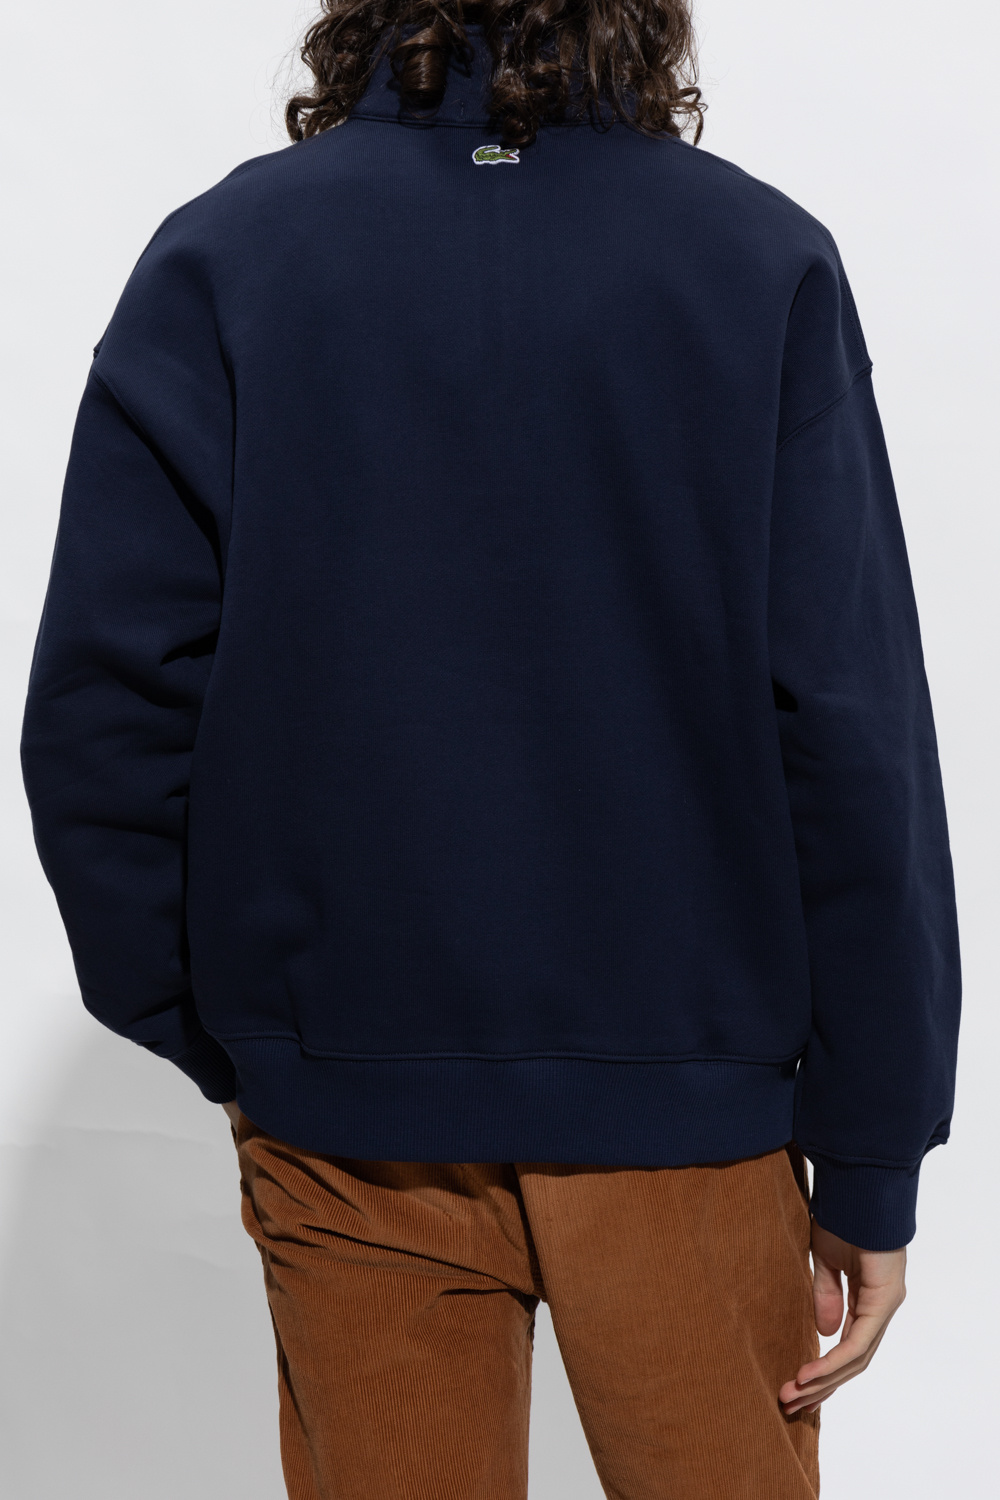 Lacoste Sweatshirt with high neck